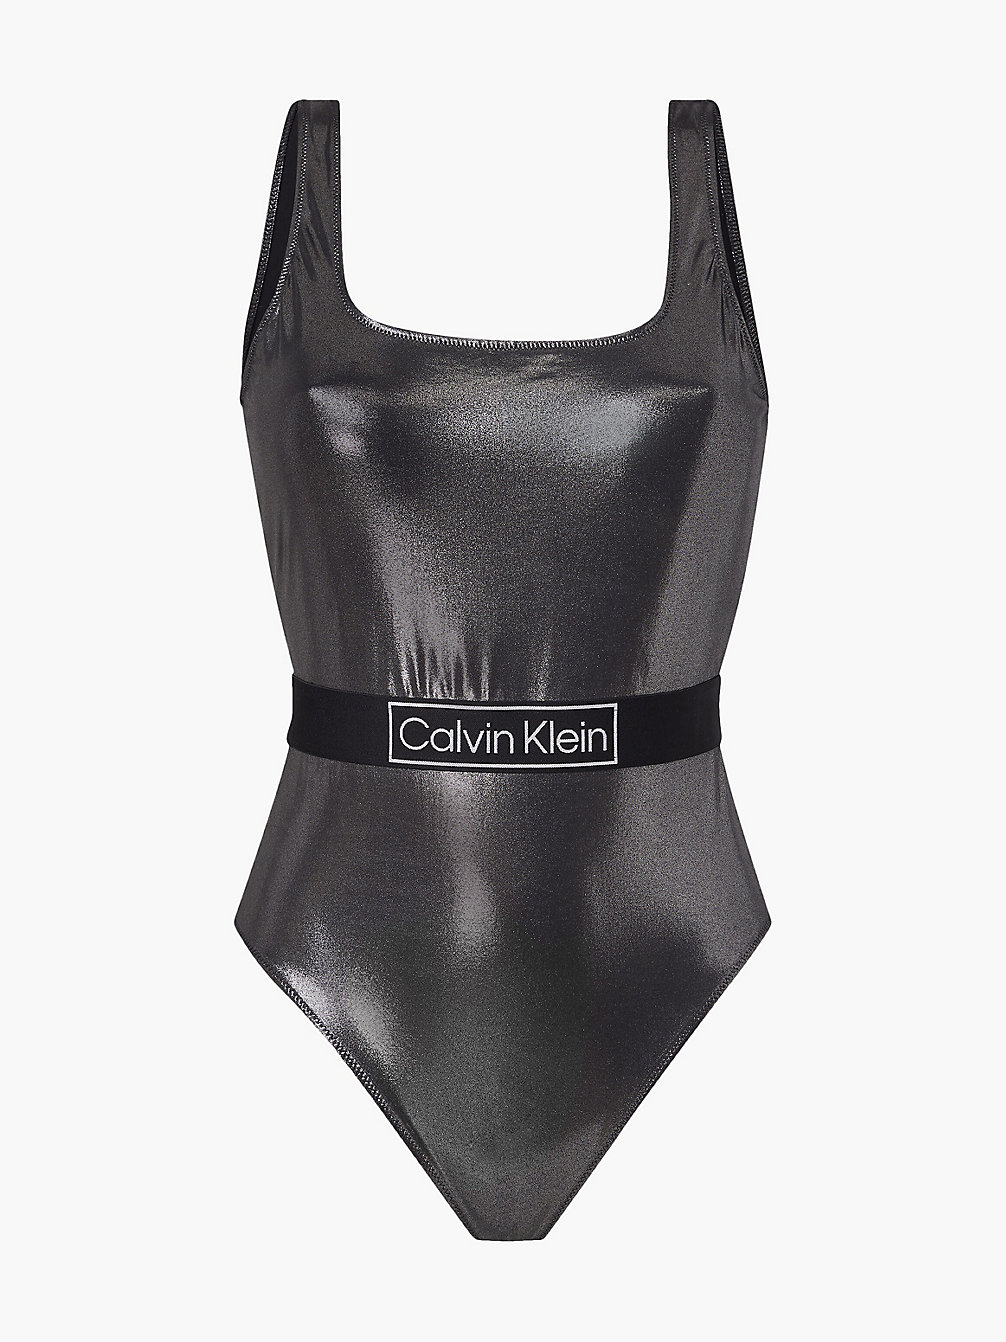 PVH BLACK Scoop Neck Swimsuit - Core Festive undefined women Calvin Klein